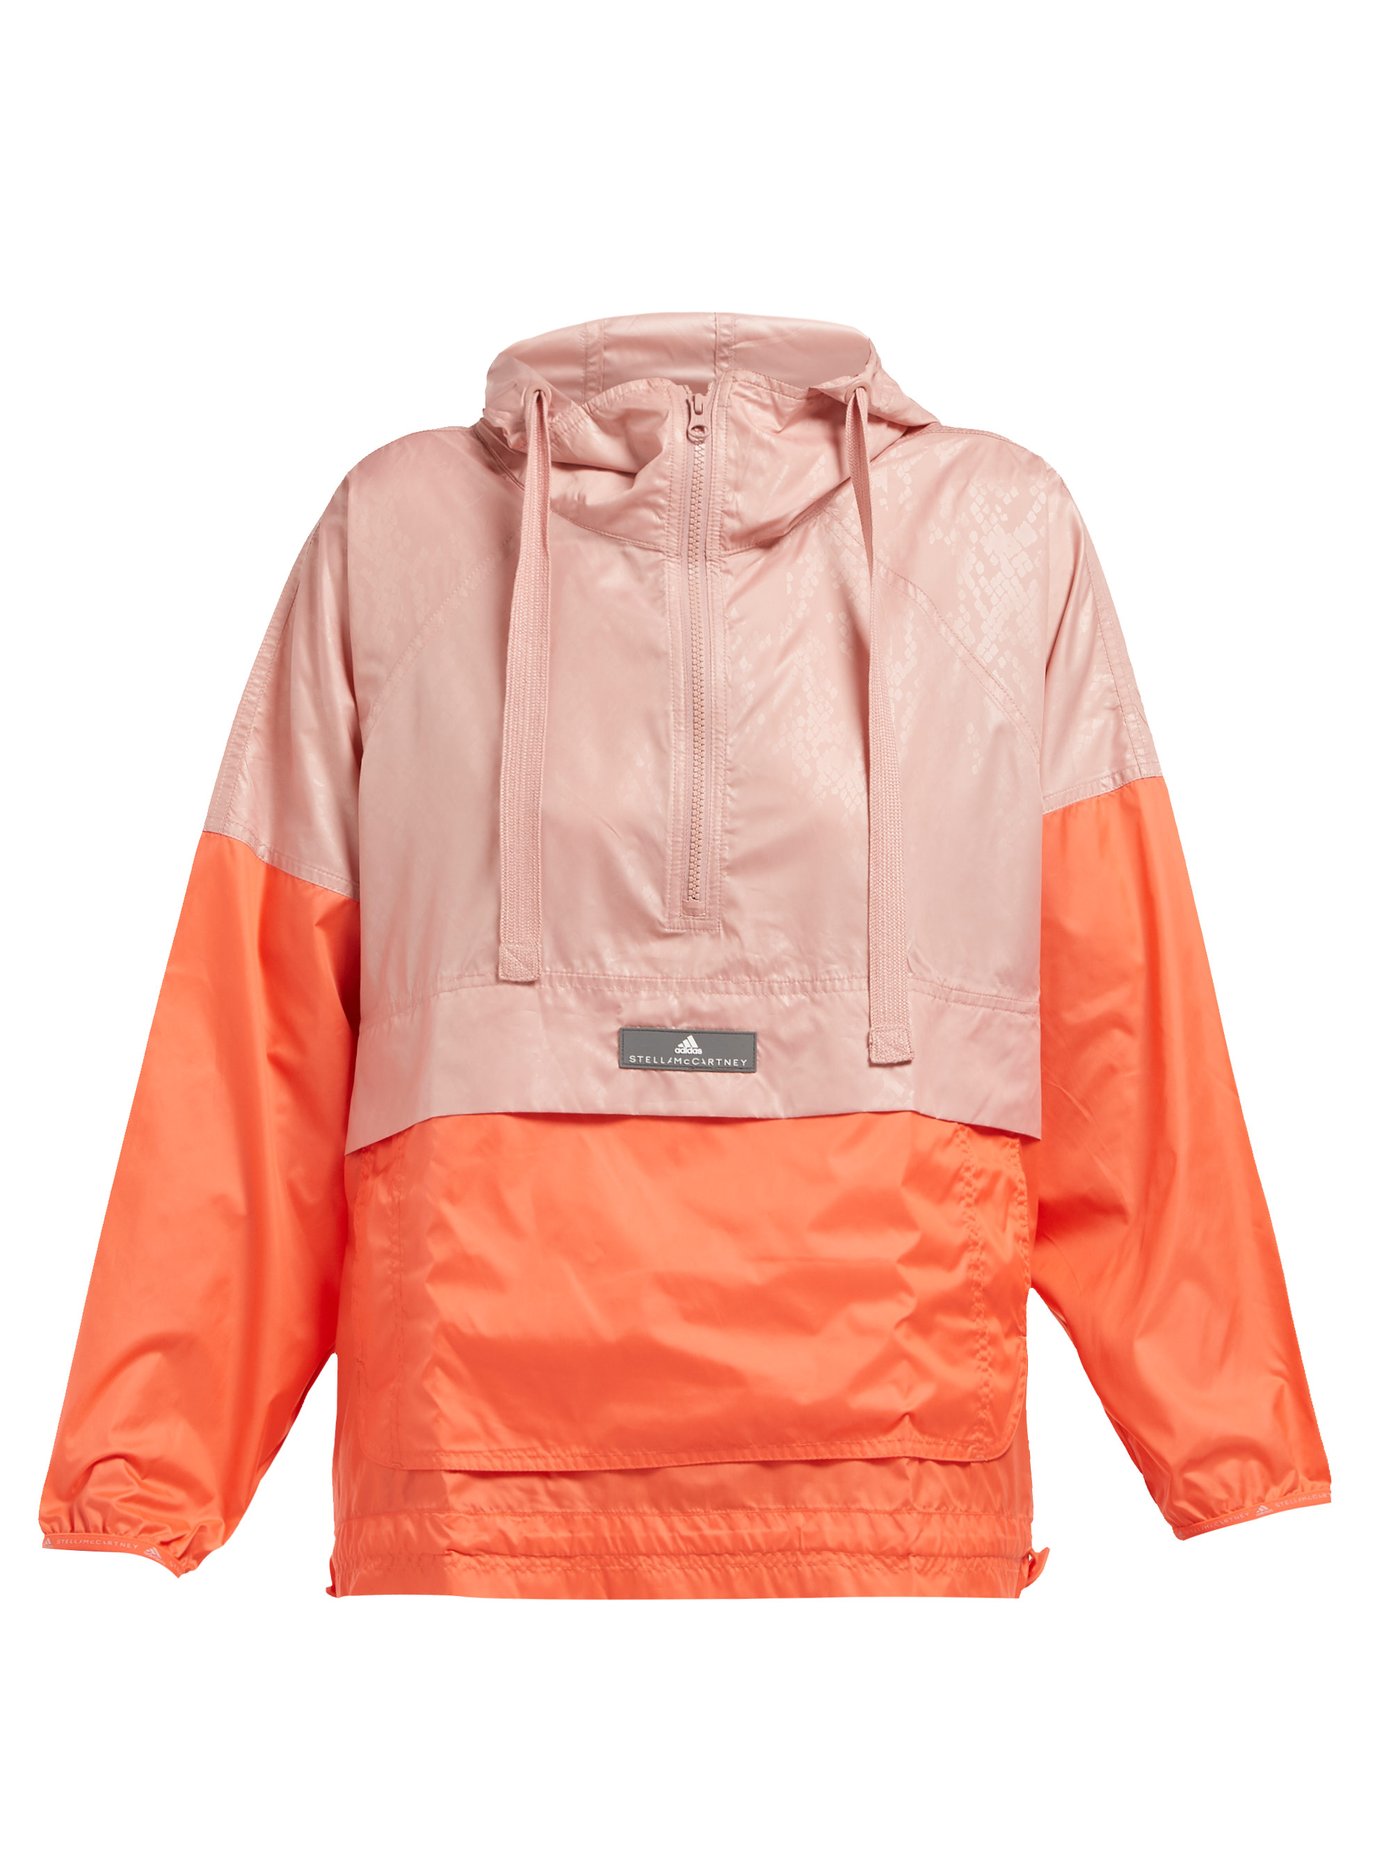 stella mccartney adidas pink jacket